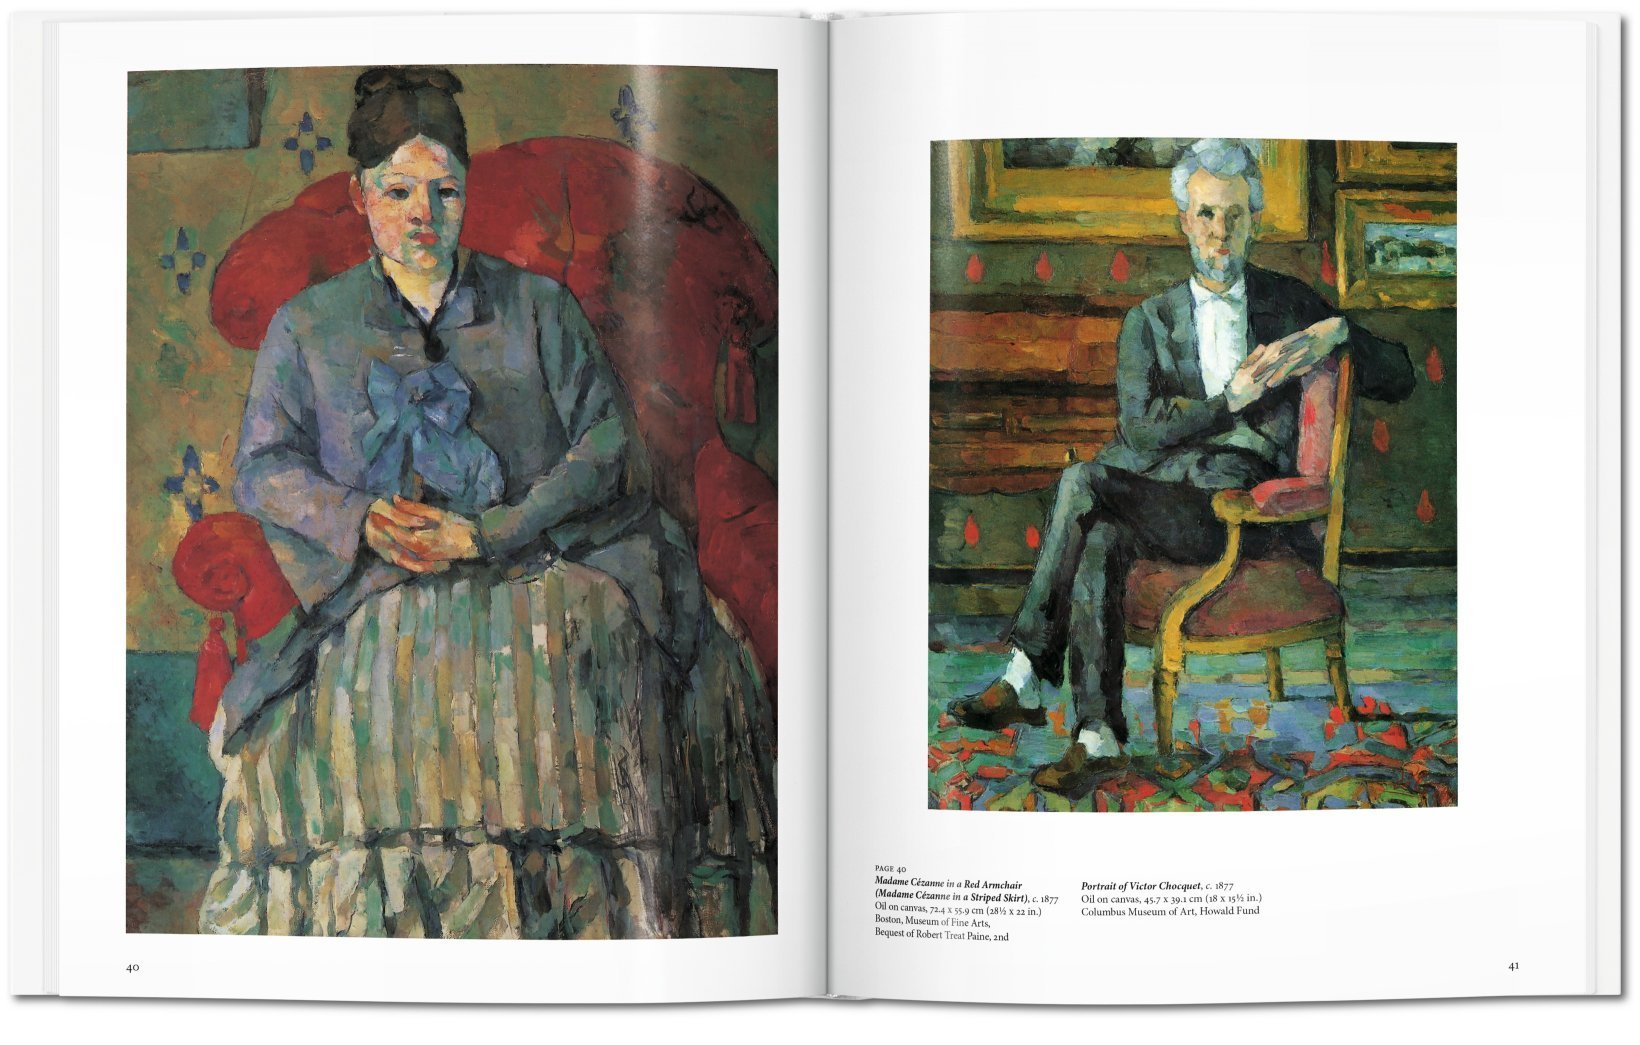 Cézanne - Basic Art Series